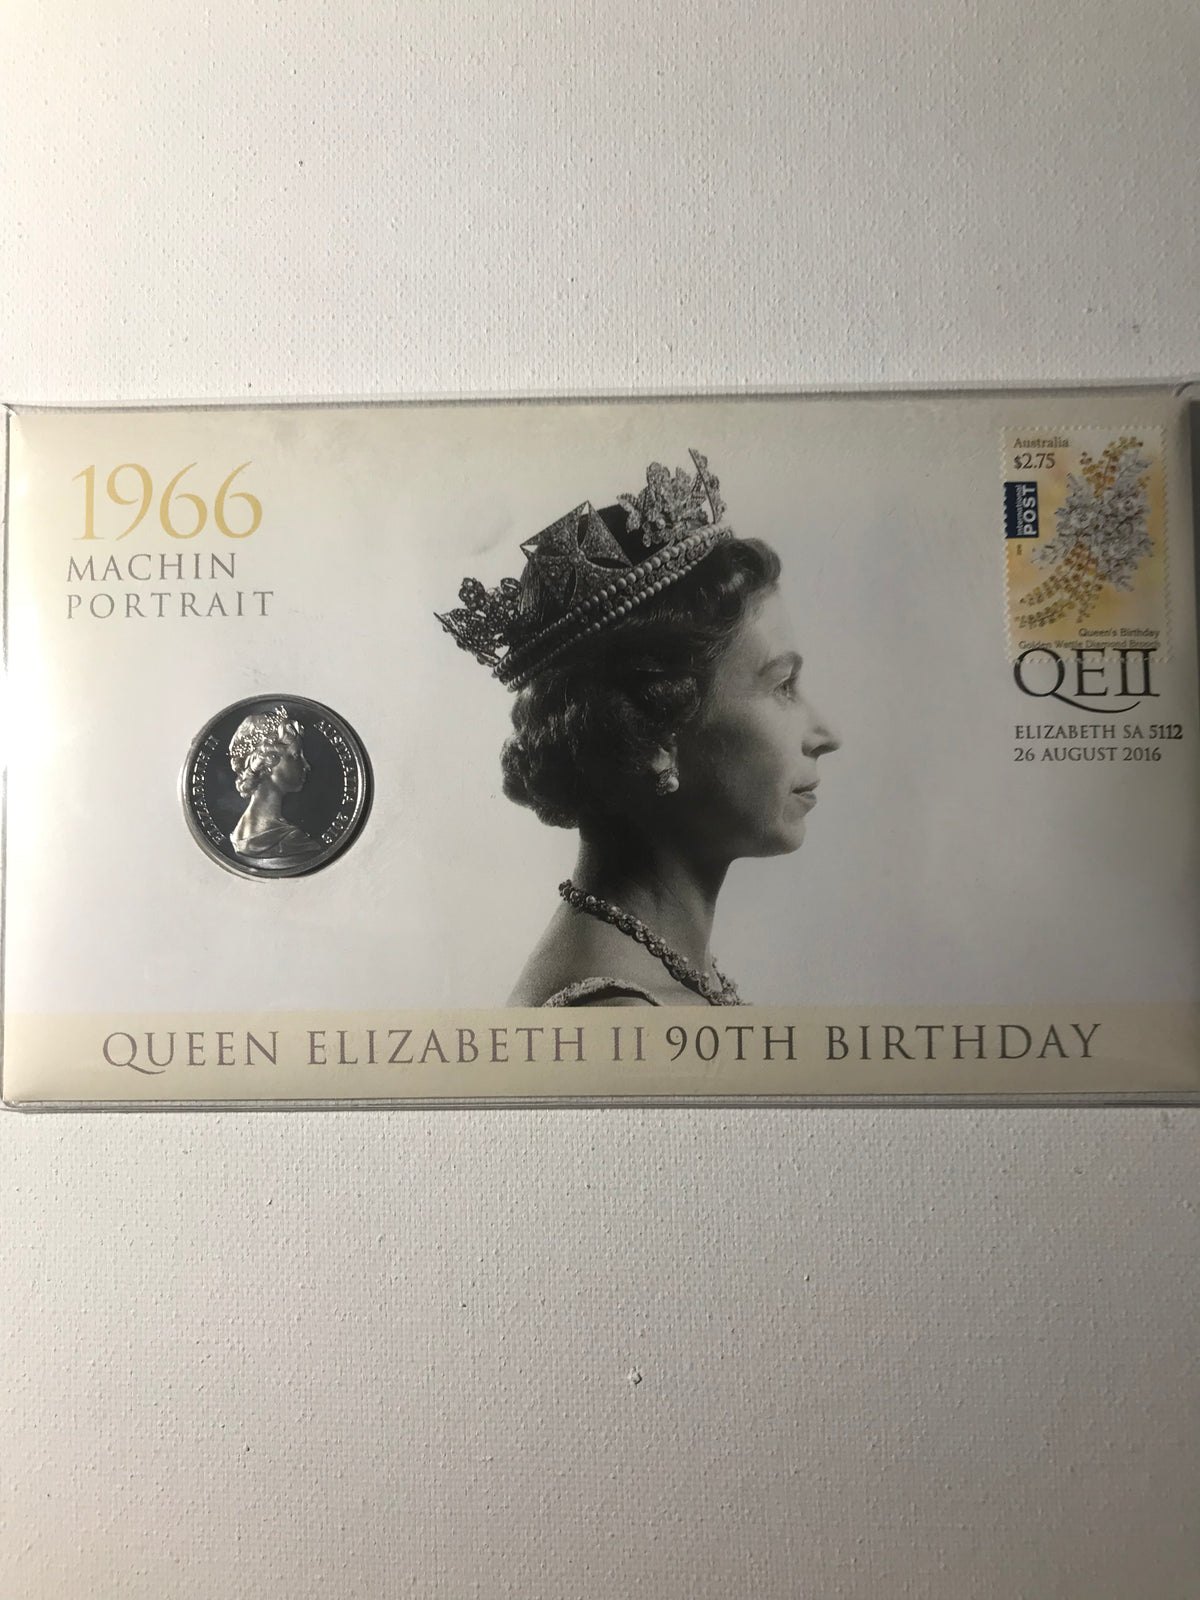 2016 PNC 20c. 1966 Machin Portrait. Queen Elizabeth's 90th Birthday